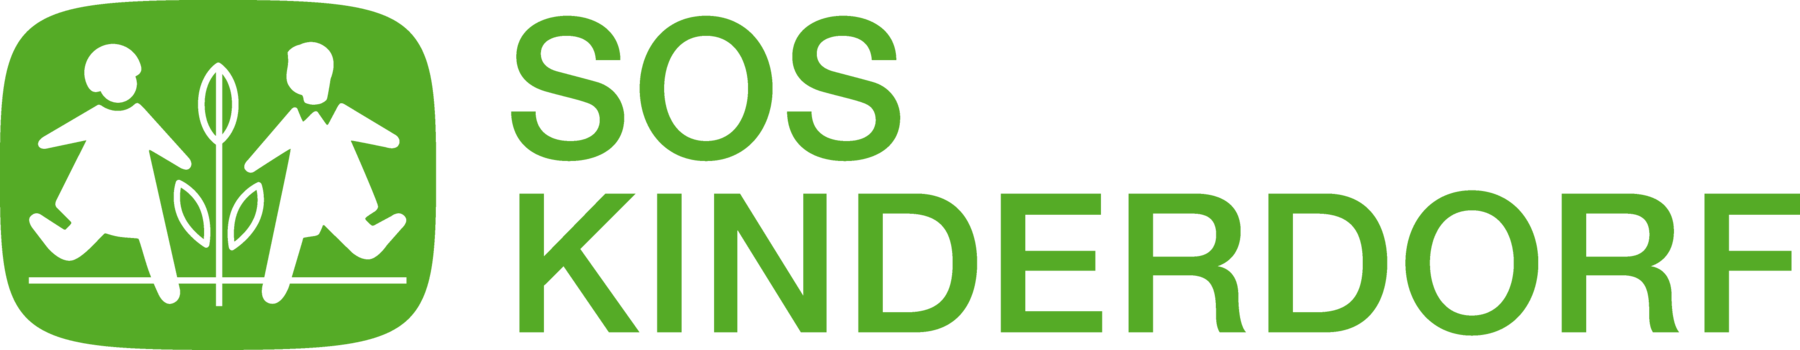 SOS Logo.png